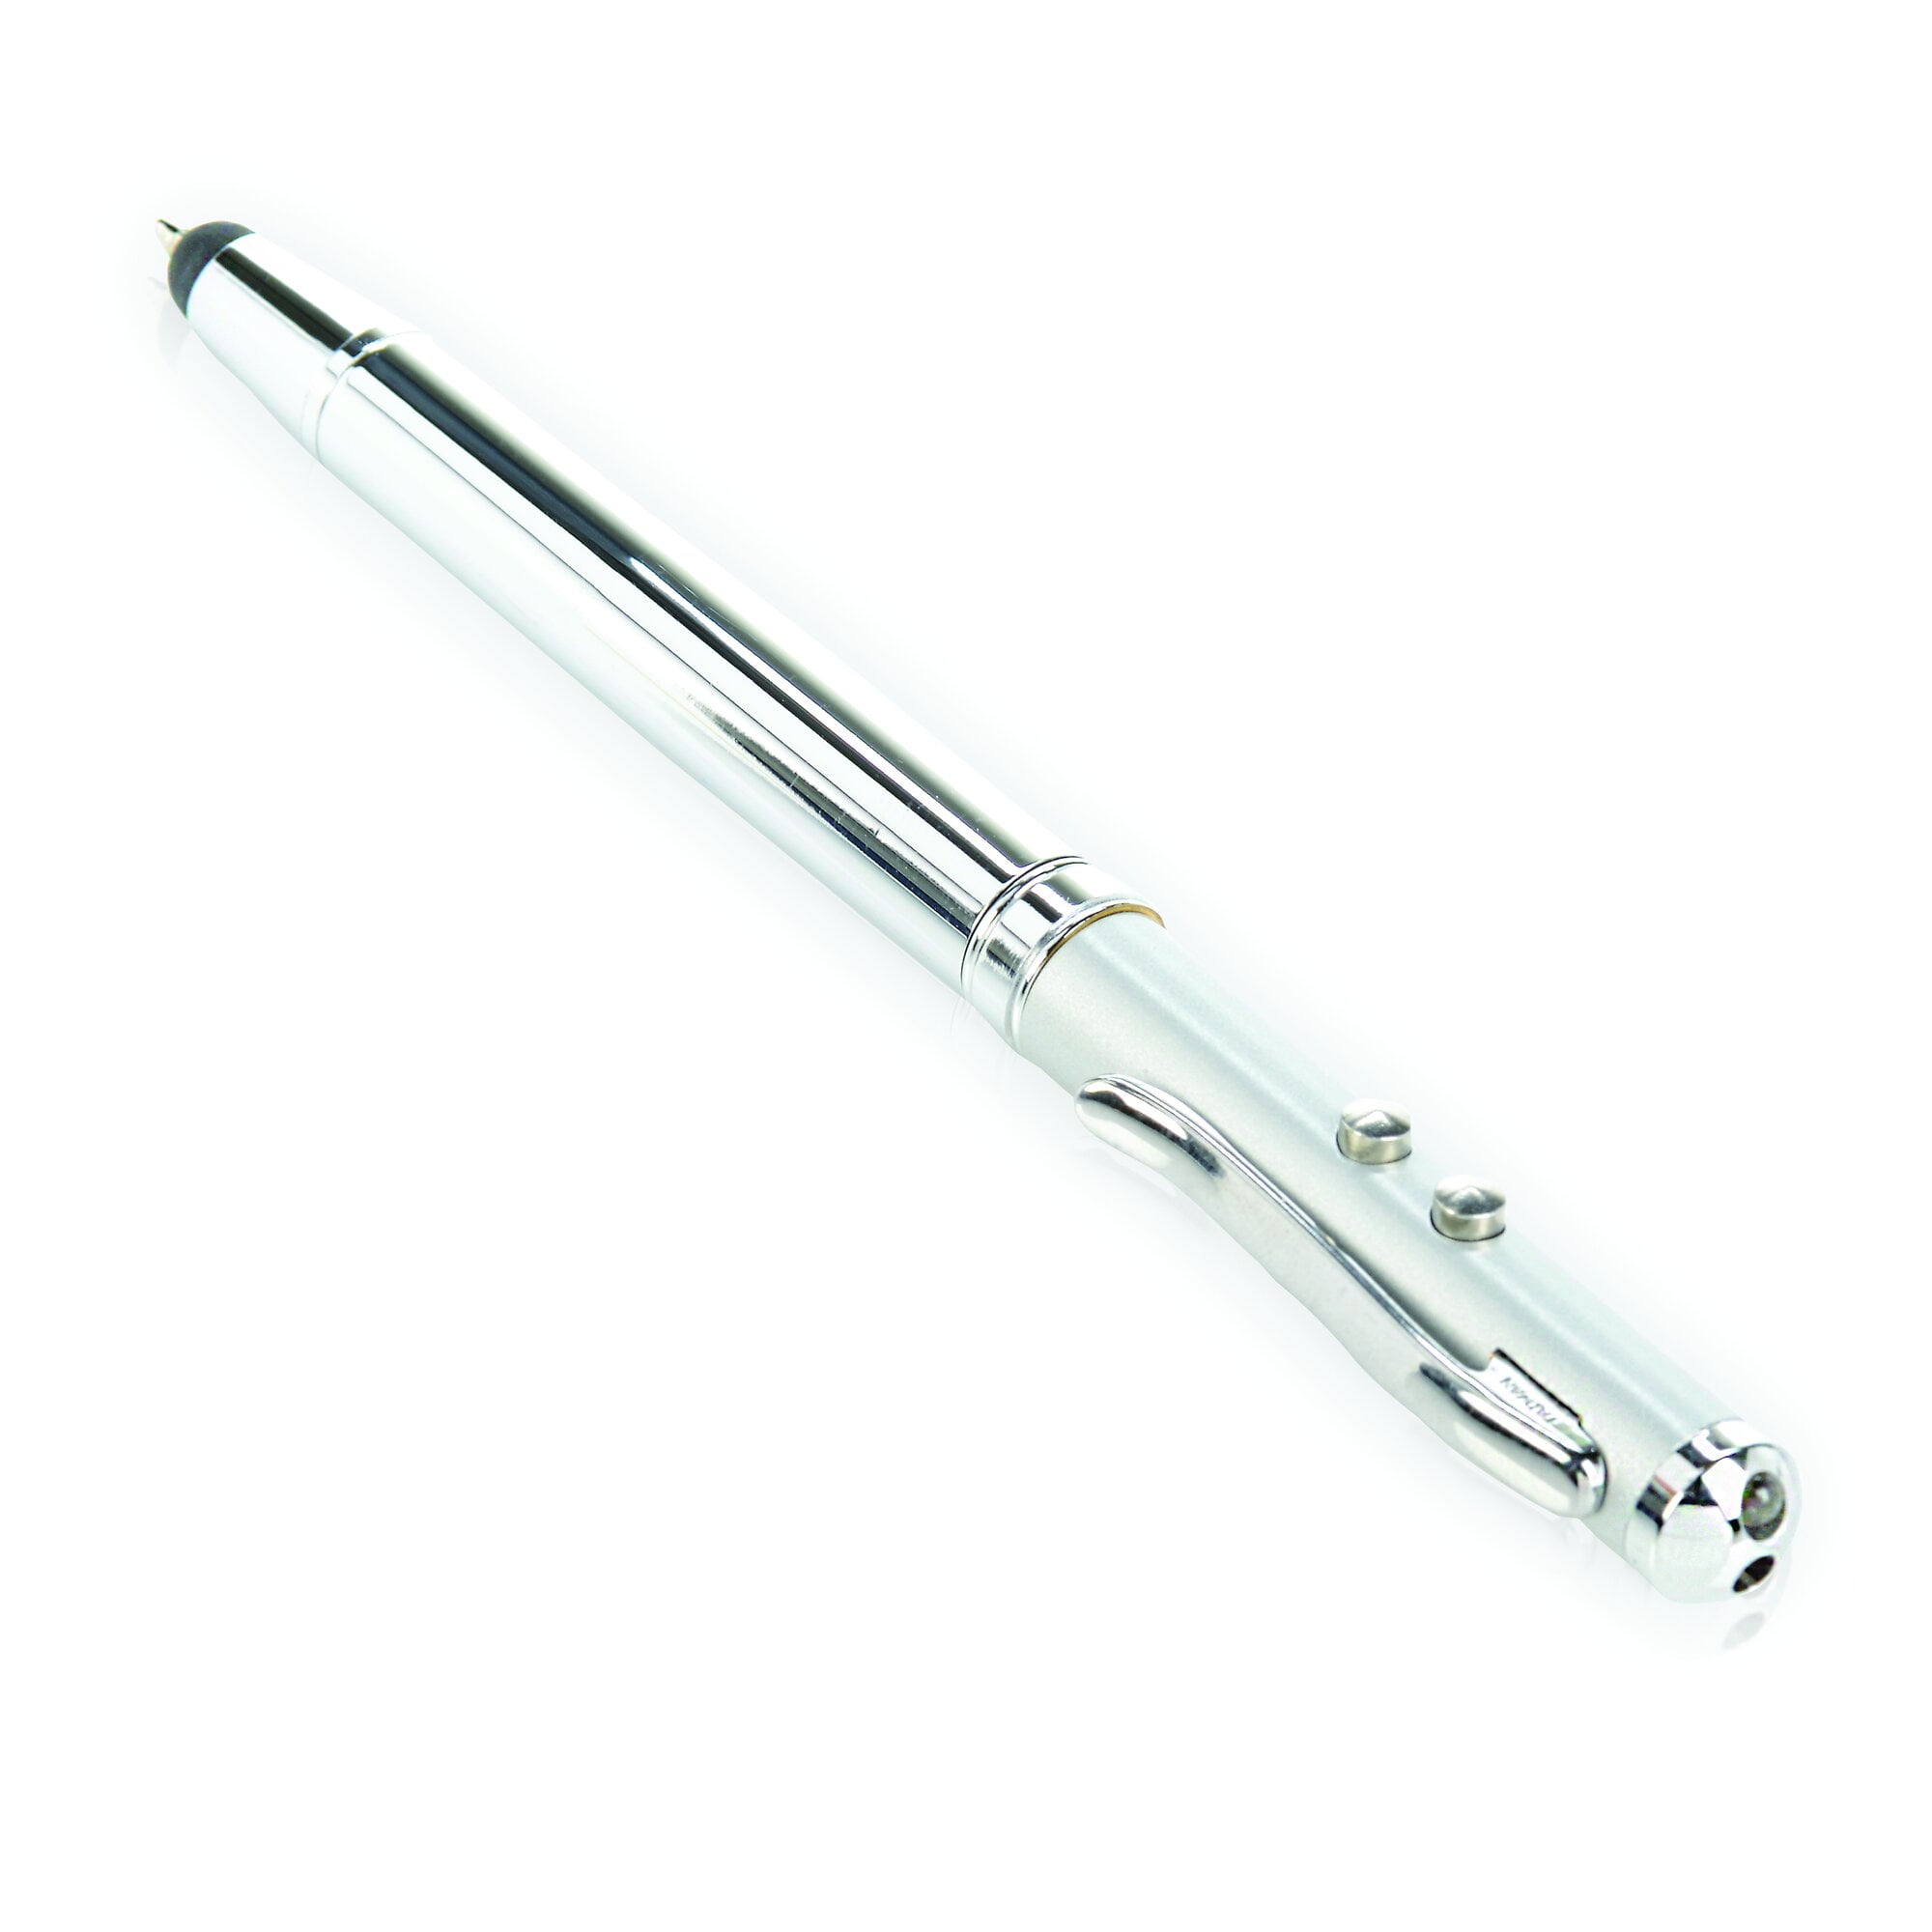 Spirius 4in1 Laser Pointer Pen Light Beam 1mW Lazer cat toy stylus+Ballpoint pen 